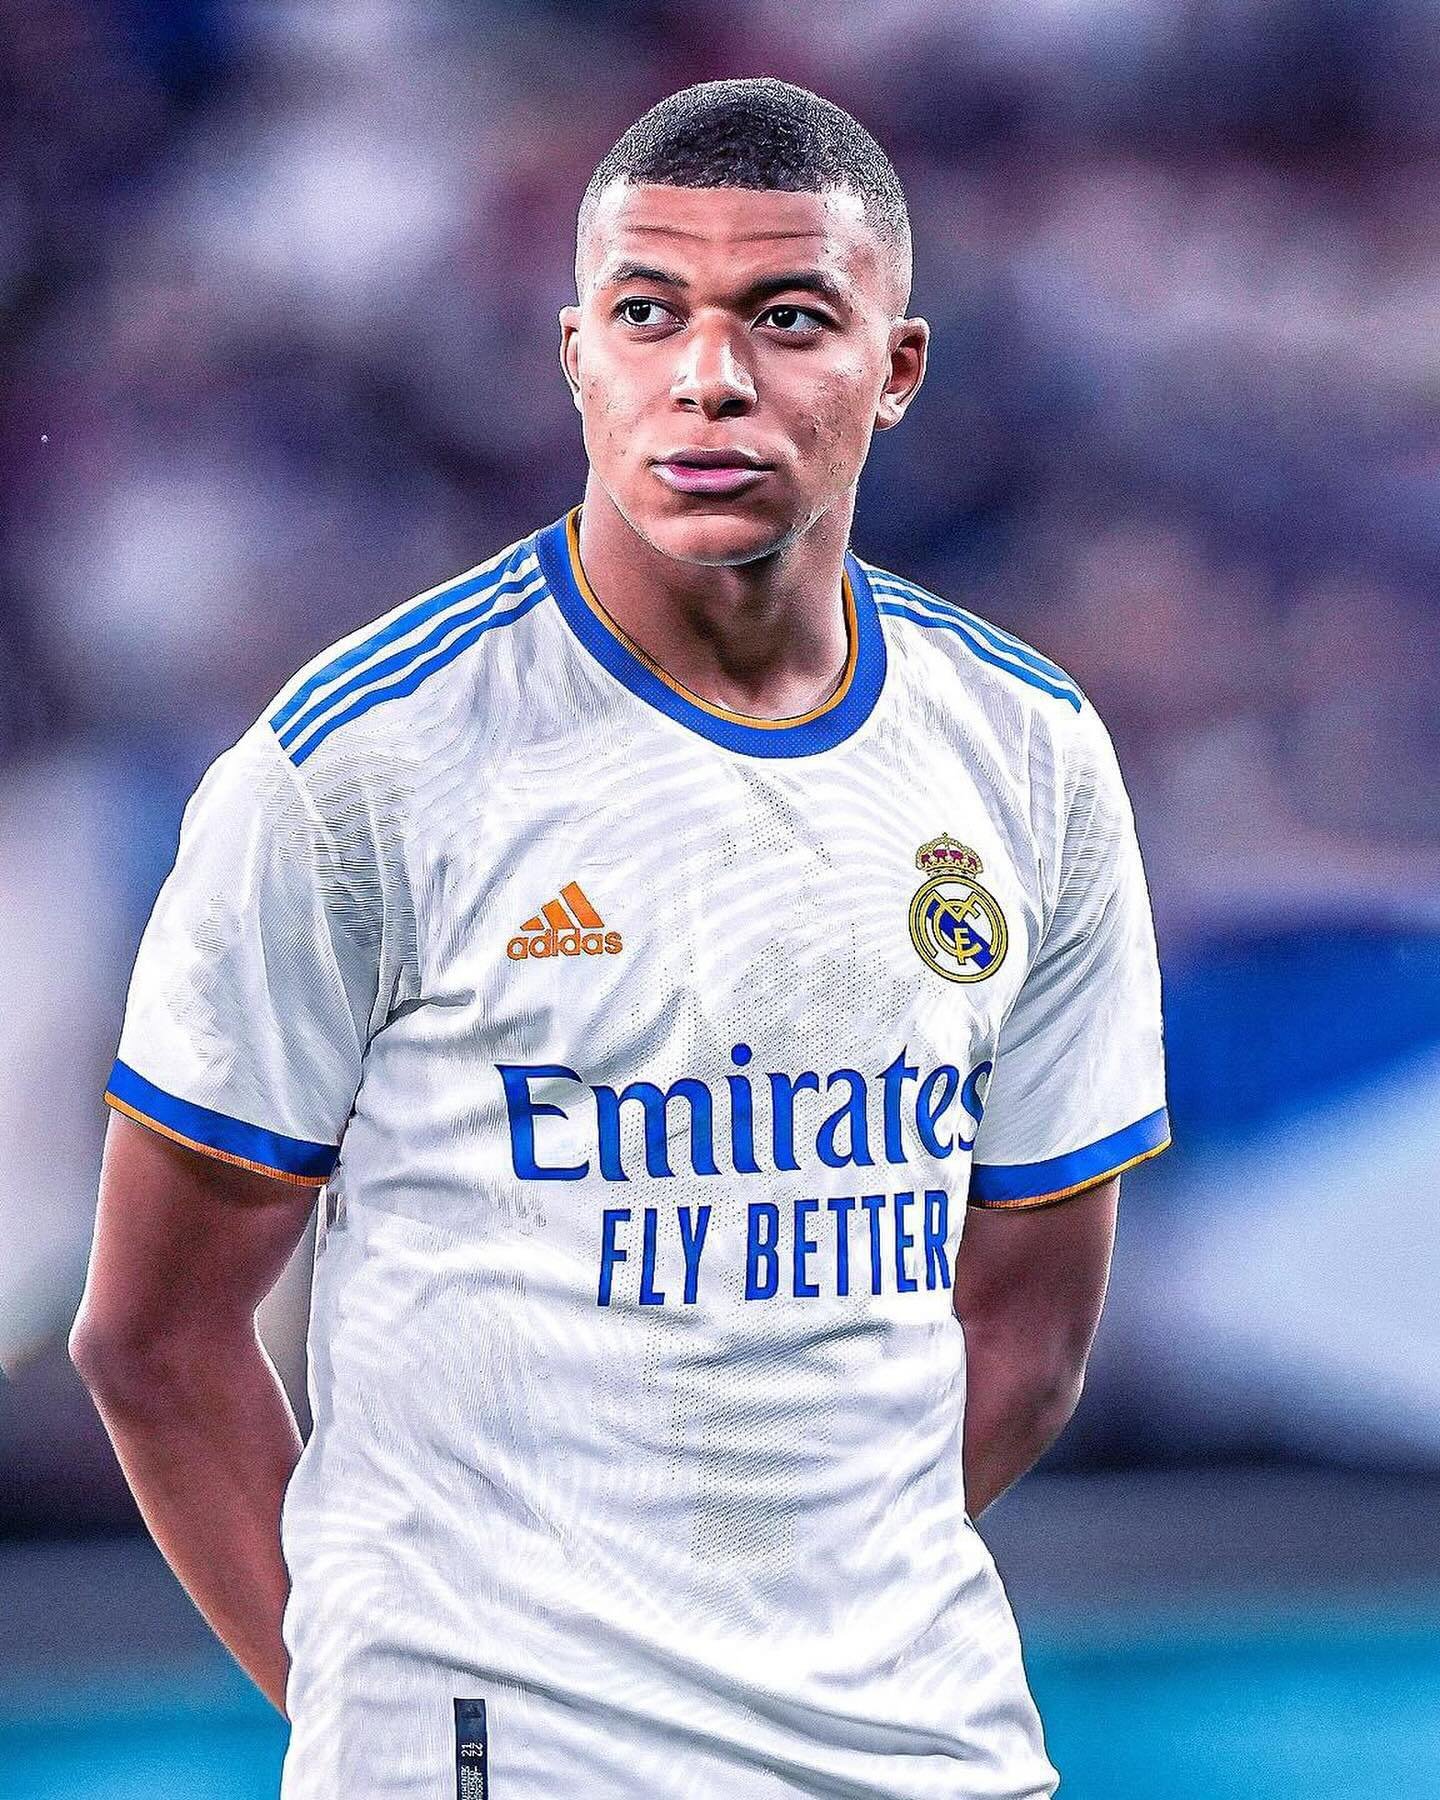 Real Madrid next season will have: 

🇫🇷 Kylian Mbappe 
🇧🇷 Endrick
🇧🇷 Vinicius Jr.
🇧🇷 Rodrygo 
🏴󠁧󠁢󠁥󠁮󠁧󠁿 Jude Bellingham 
🇹🇷 Arda Guler 
🇫🇷 Camavinga
🇫🇷 Tchouameni

You&rsquo;re not ready 😮&zwj;💨